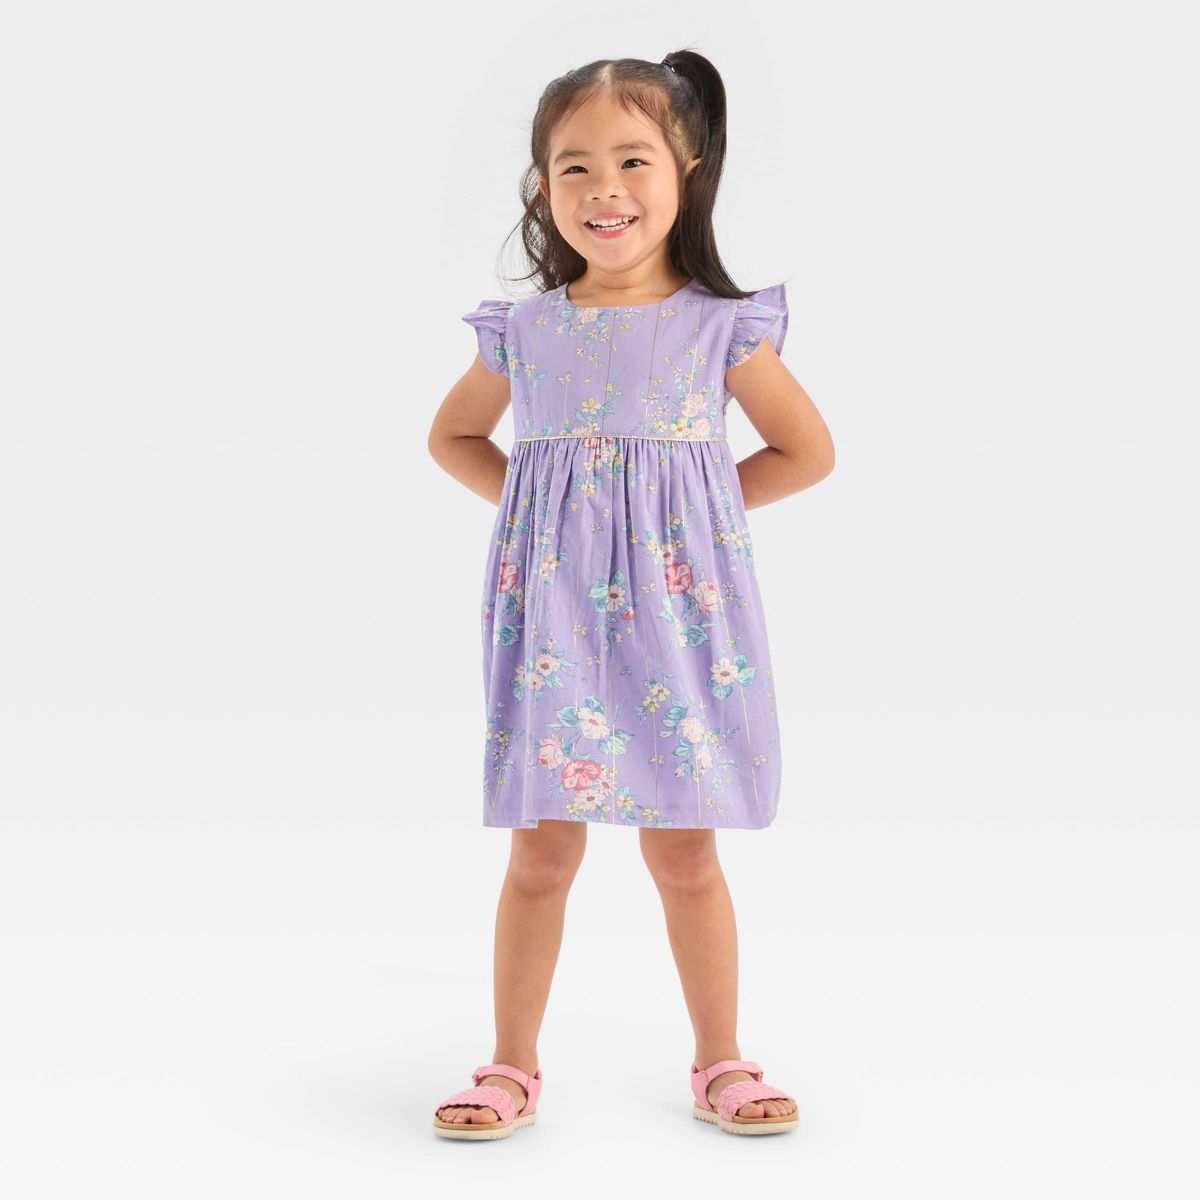 OshKosh B'gosh Toddler Girls' Floral Dress - Blue | Target